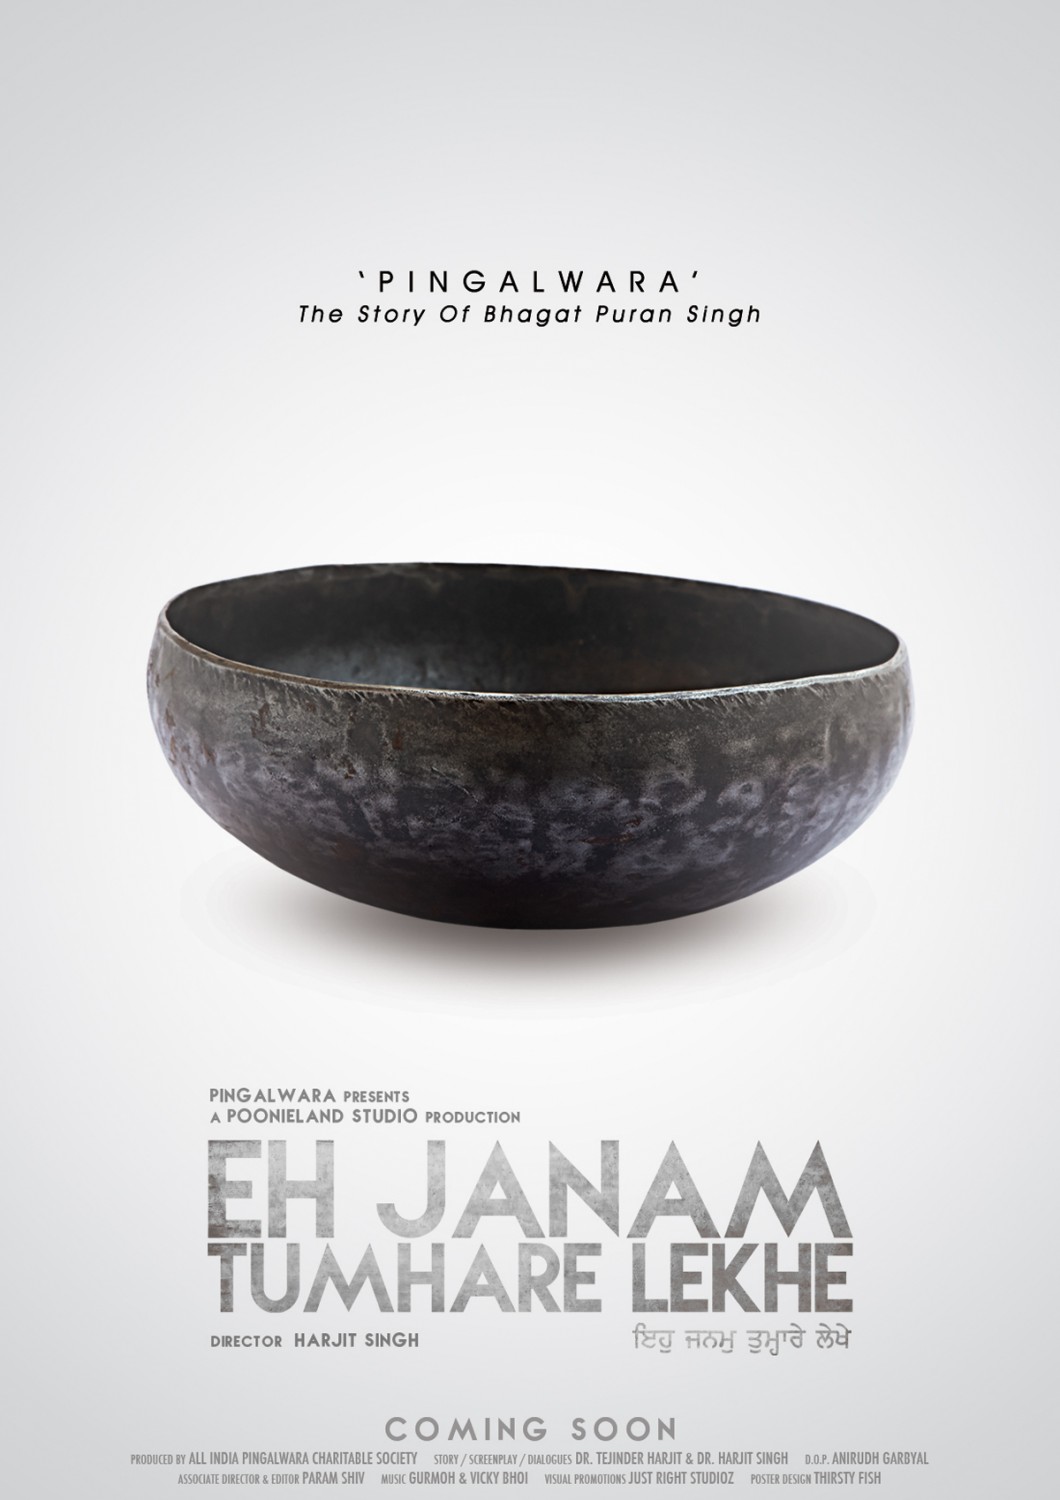 Extra Large Movie Poster Image for Eh Janam Tumhare Lekhe 